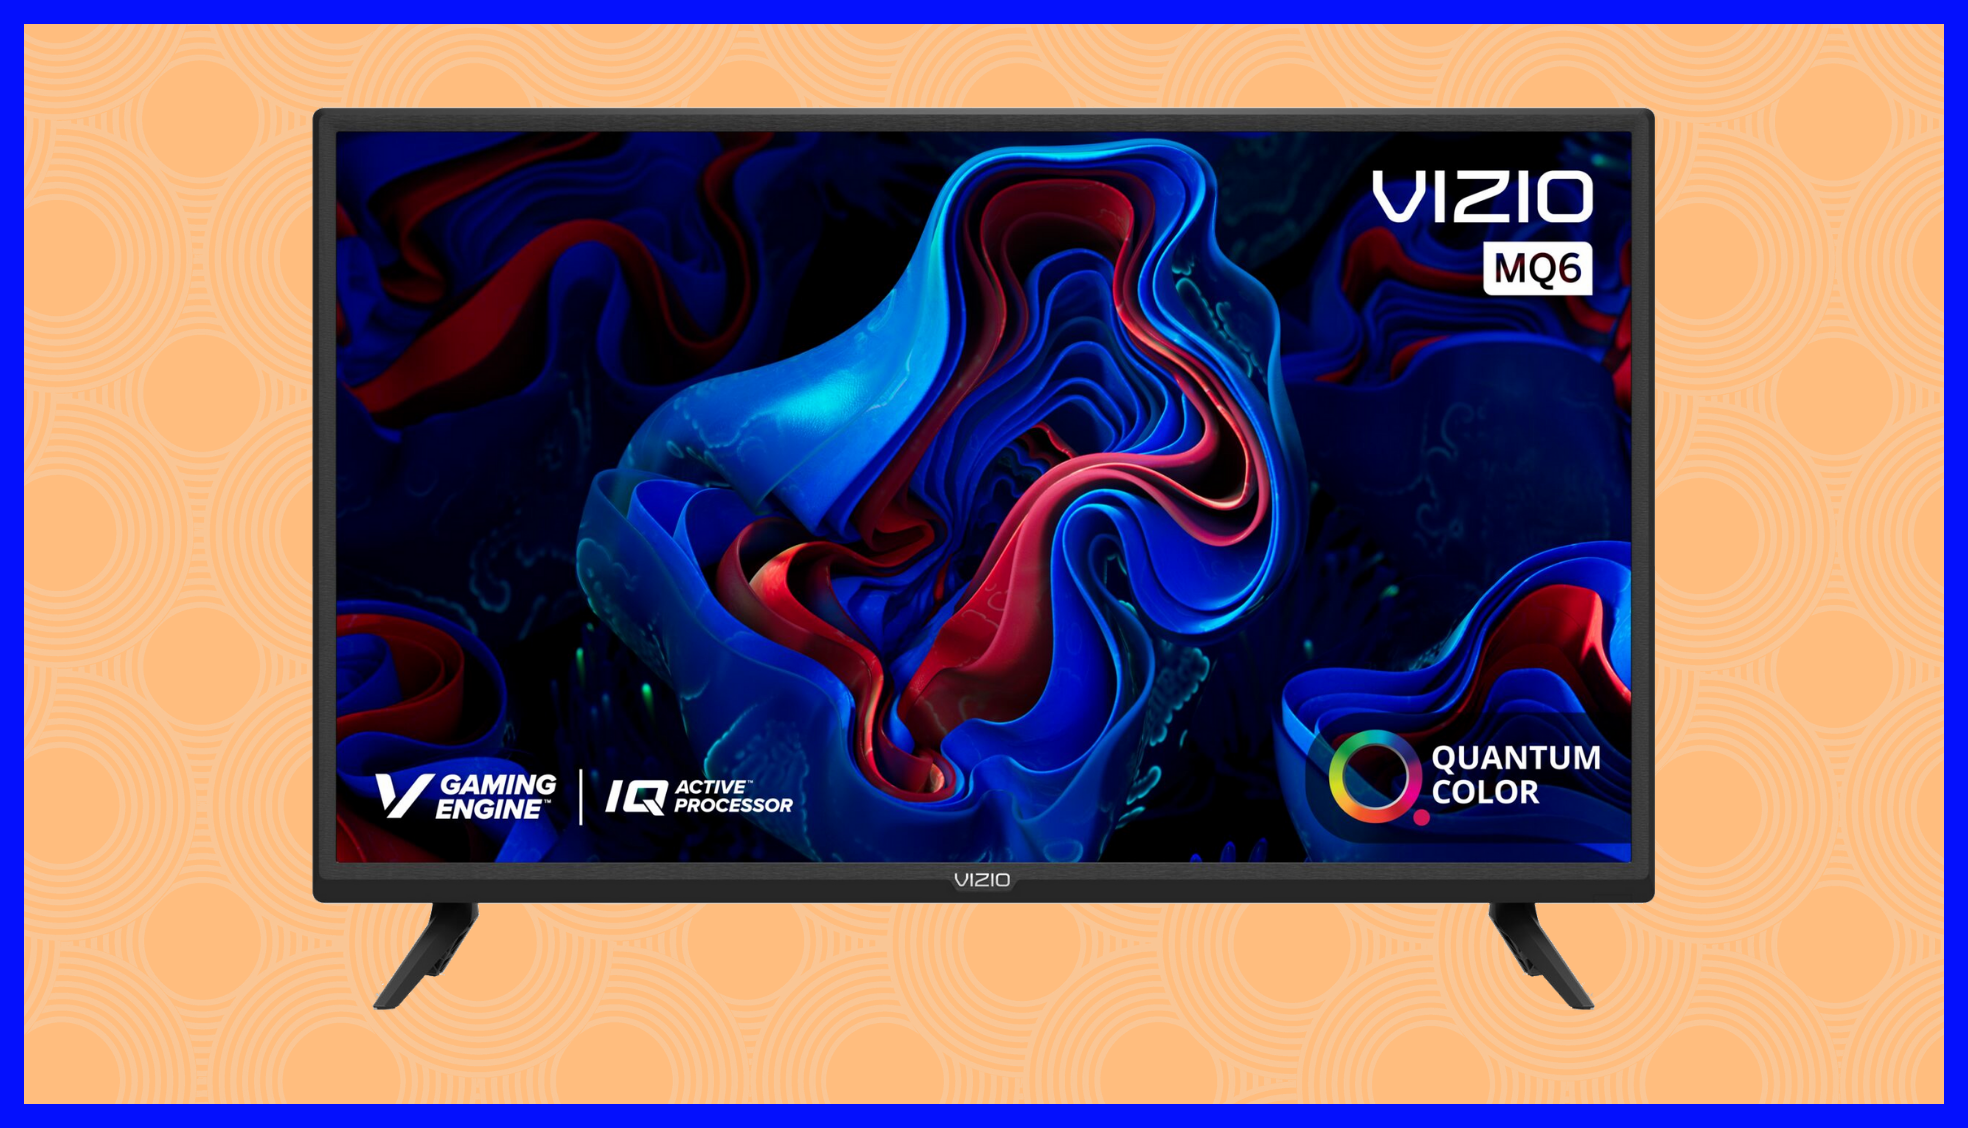 The Vizio 50 inch 4K Ultra HD smart TV is on sale at Walmart